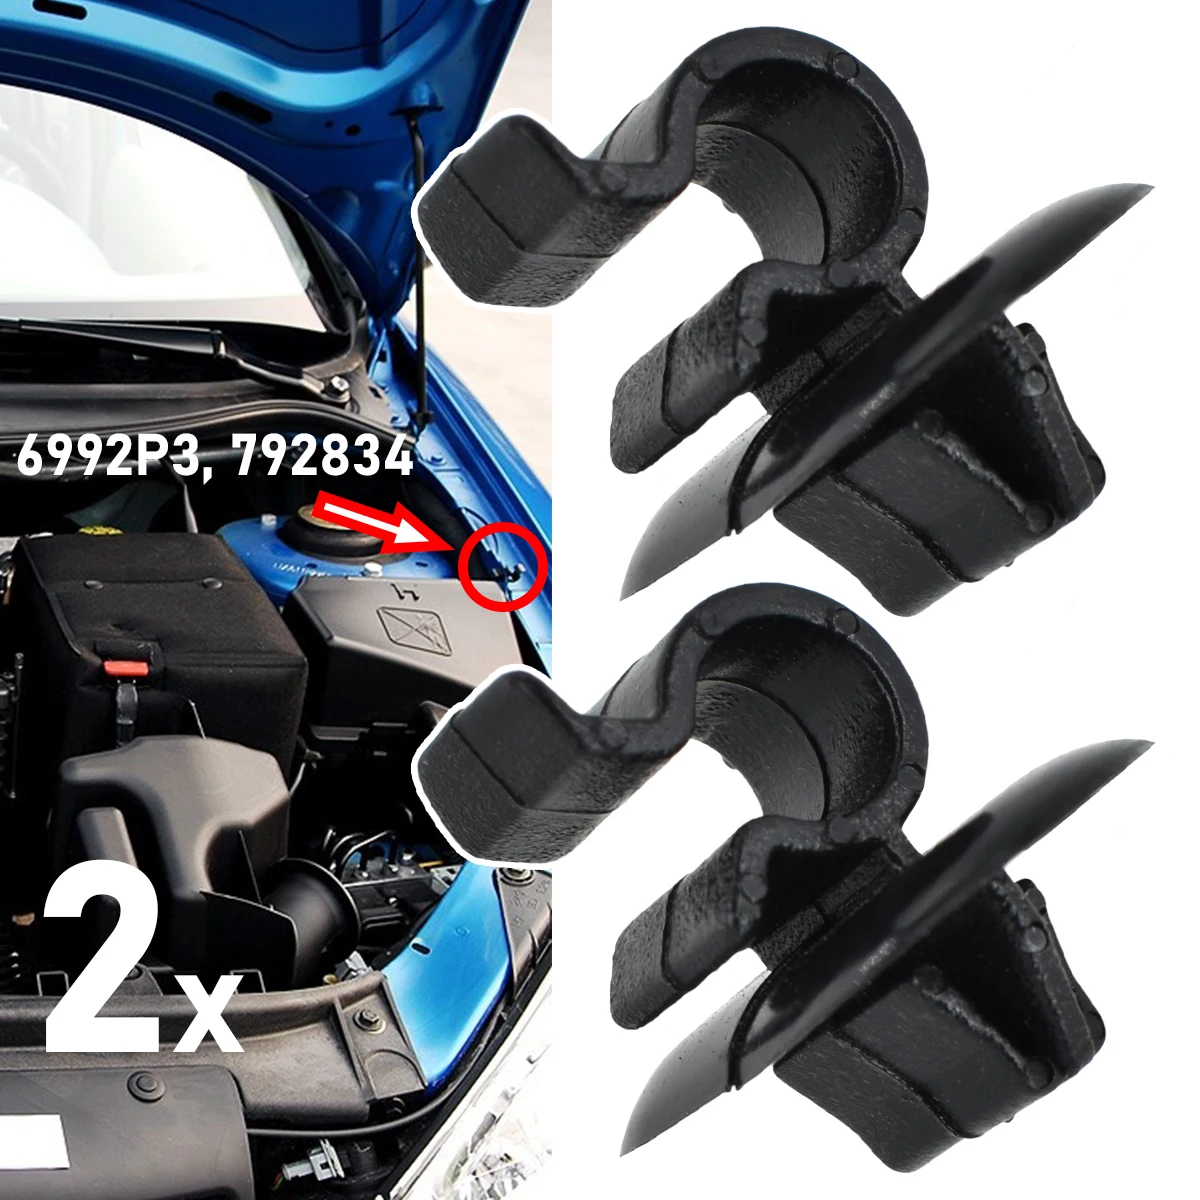 

2x Bonnet Rod Hood Support Prop Stay Clip Holder Clamp 792834 For Peugeot 1007 106 206 306 3008 407 Partner B9 Fastener Retainer